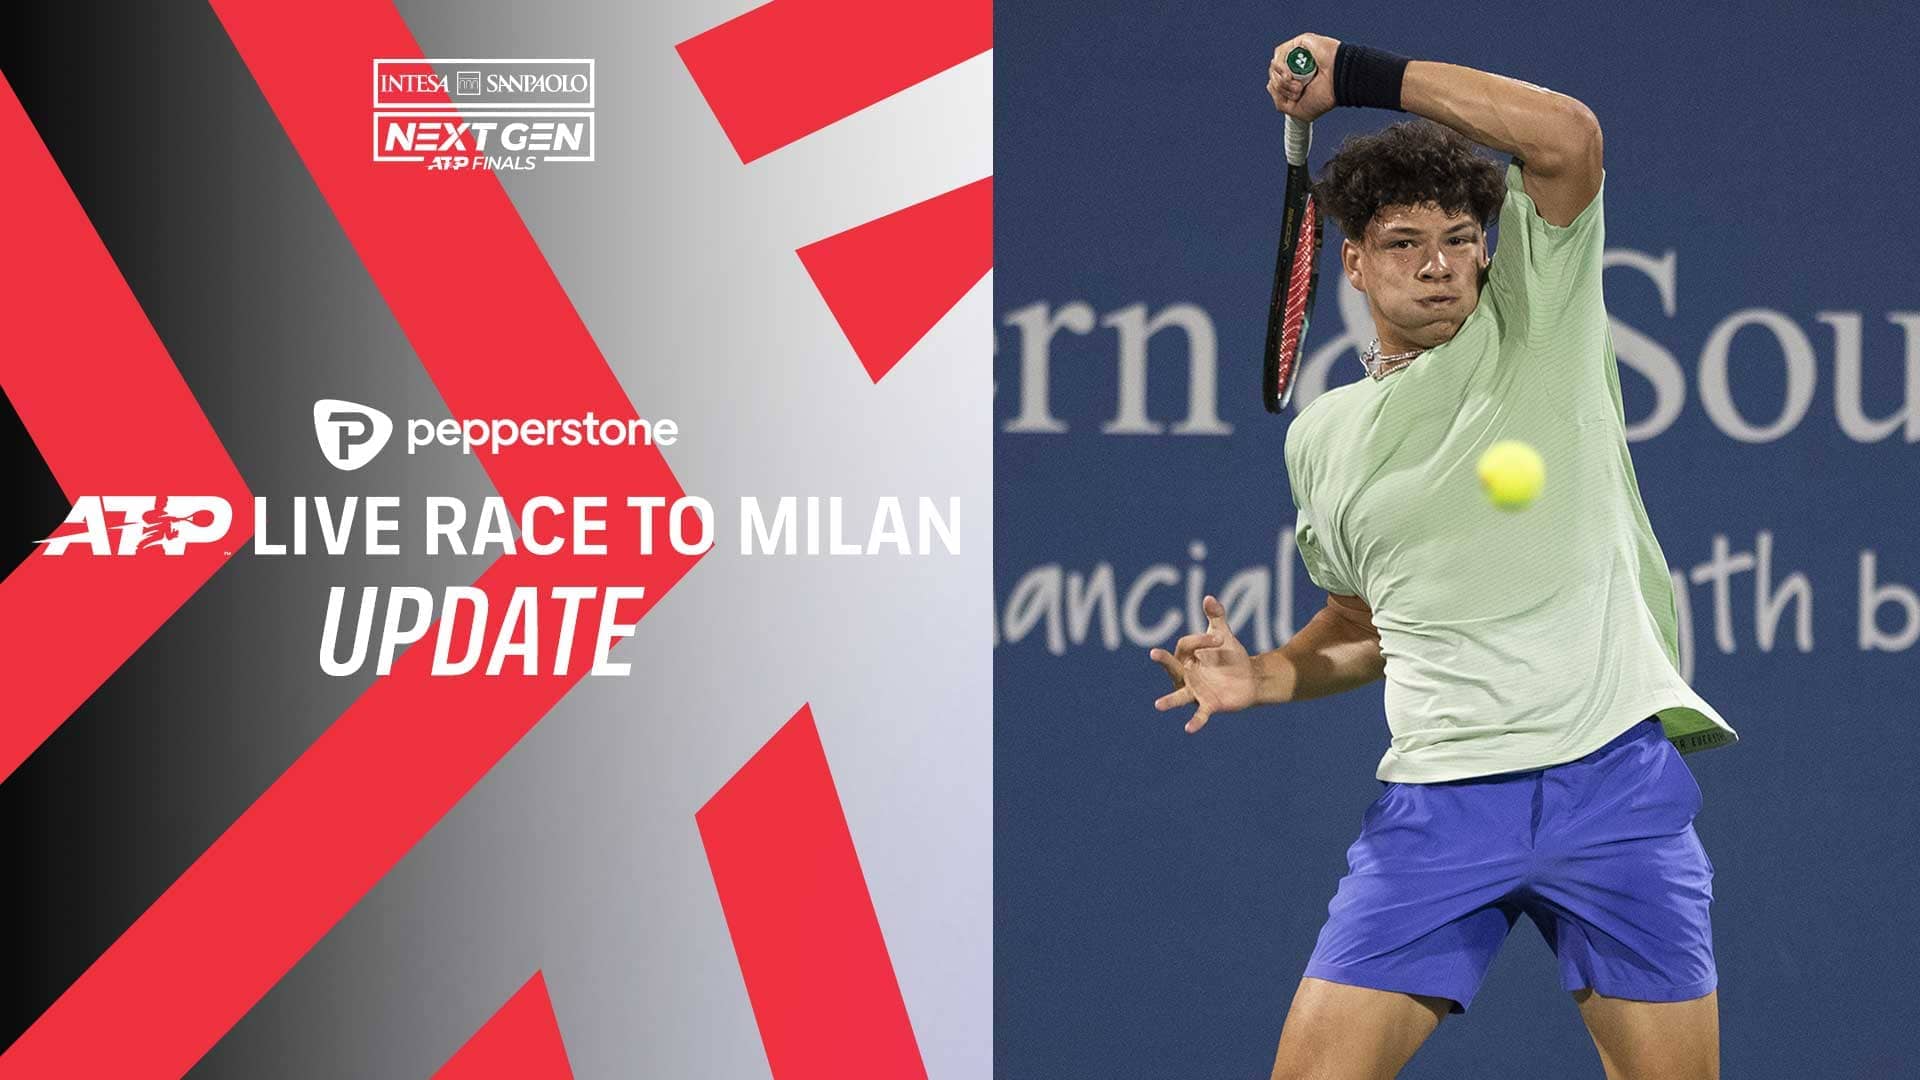 Ben Shelton Makes His Move In Milan Race ATP Tour Tennis